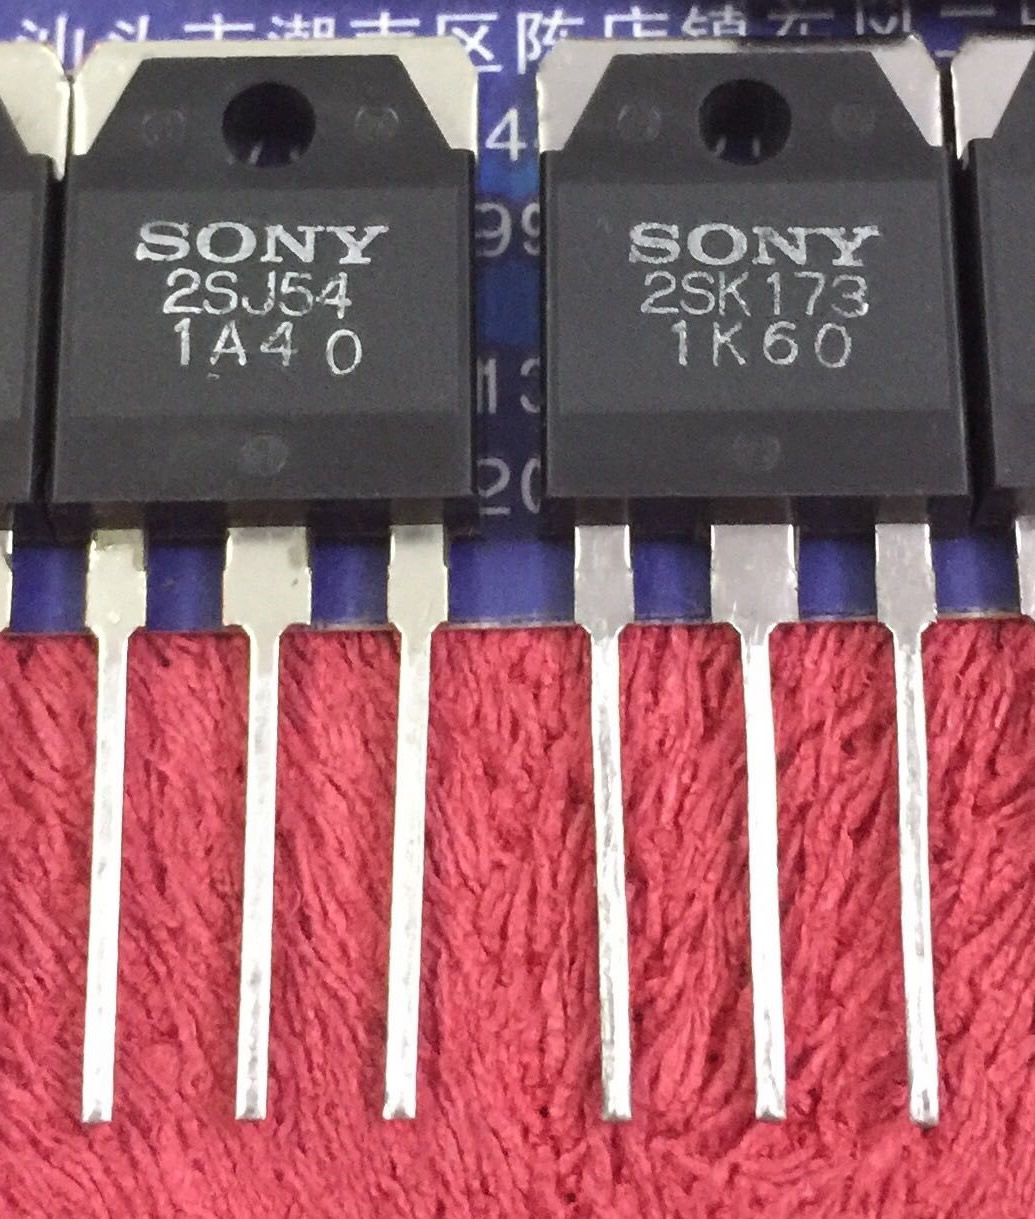 2SJ54 2SK173 New Original SONY Sony 5pair/lot